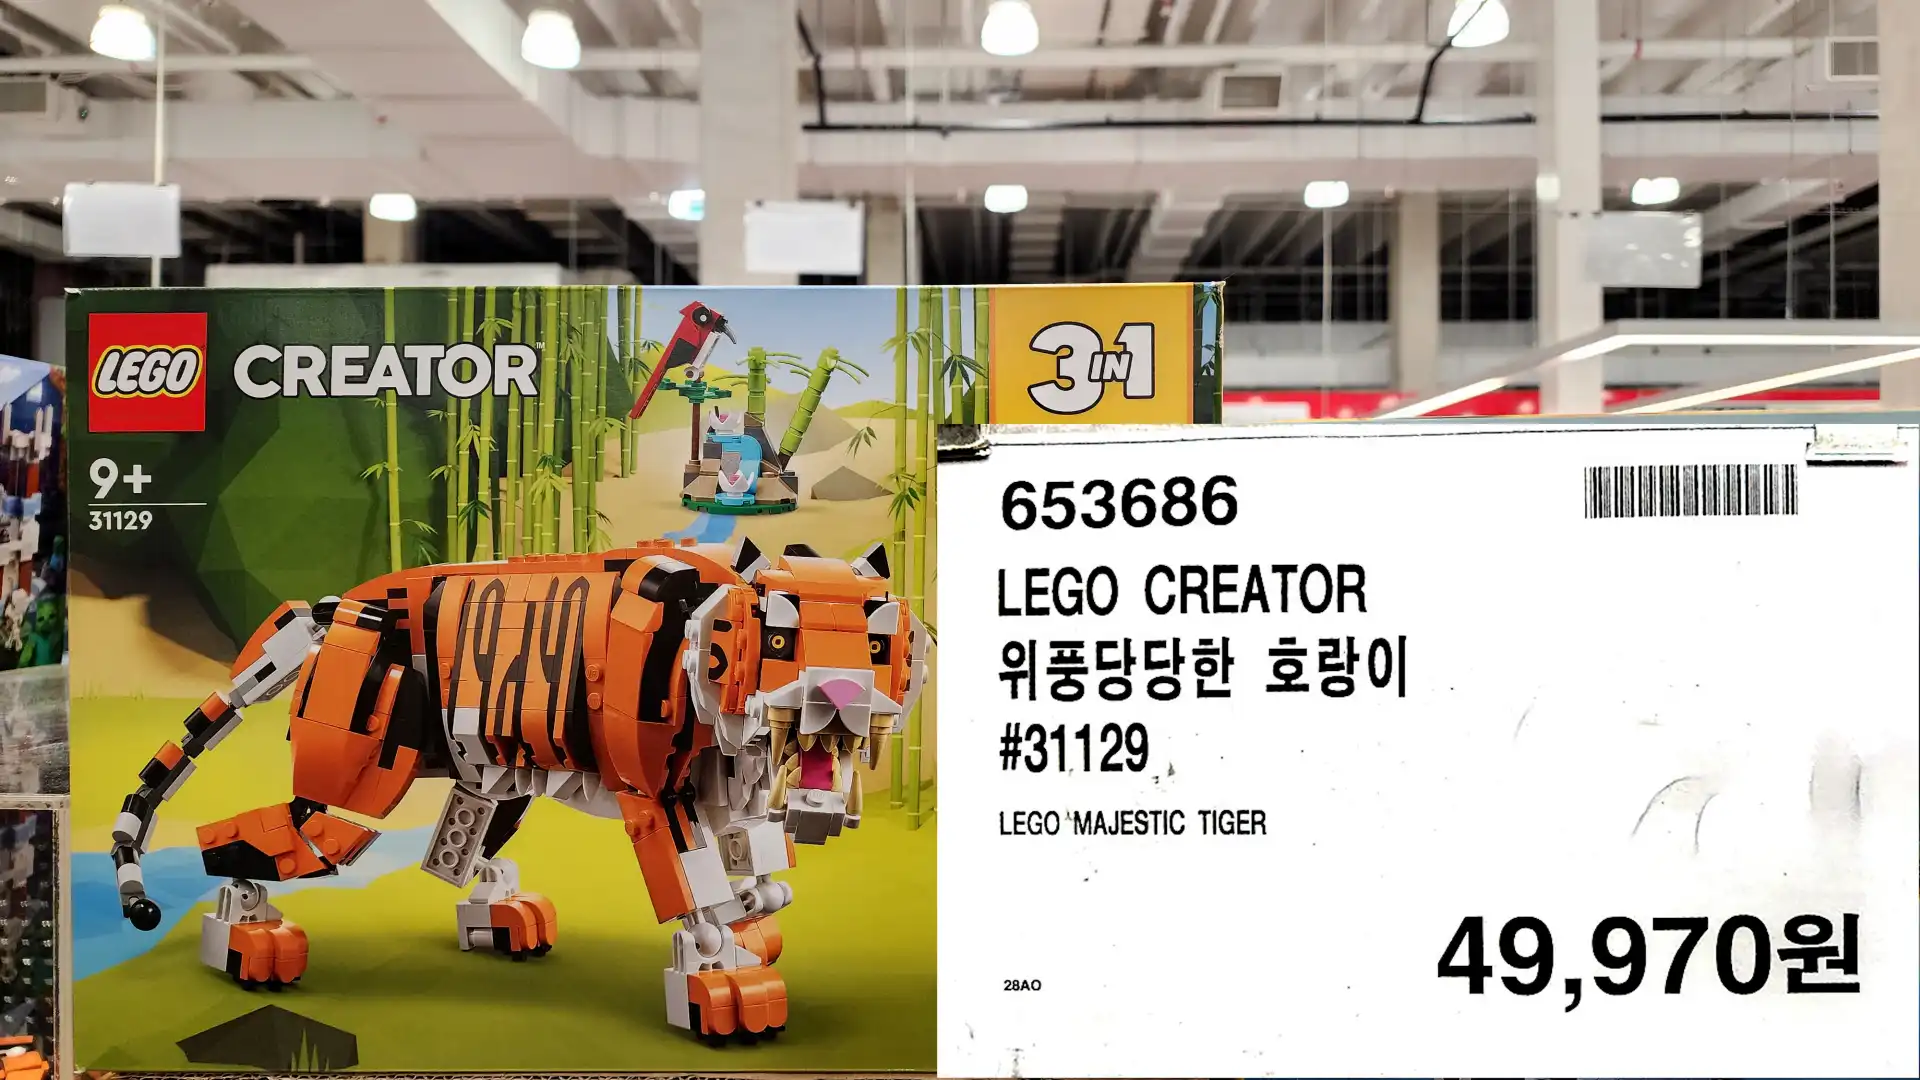 LEGO CREATOR
위풍당당한 호랑이
#31129
LEGO MAJESTIC TIGER
28AO
49,970원